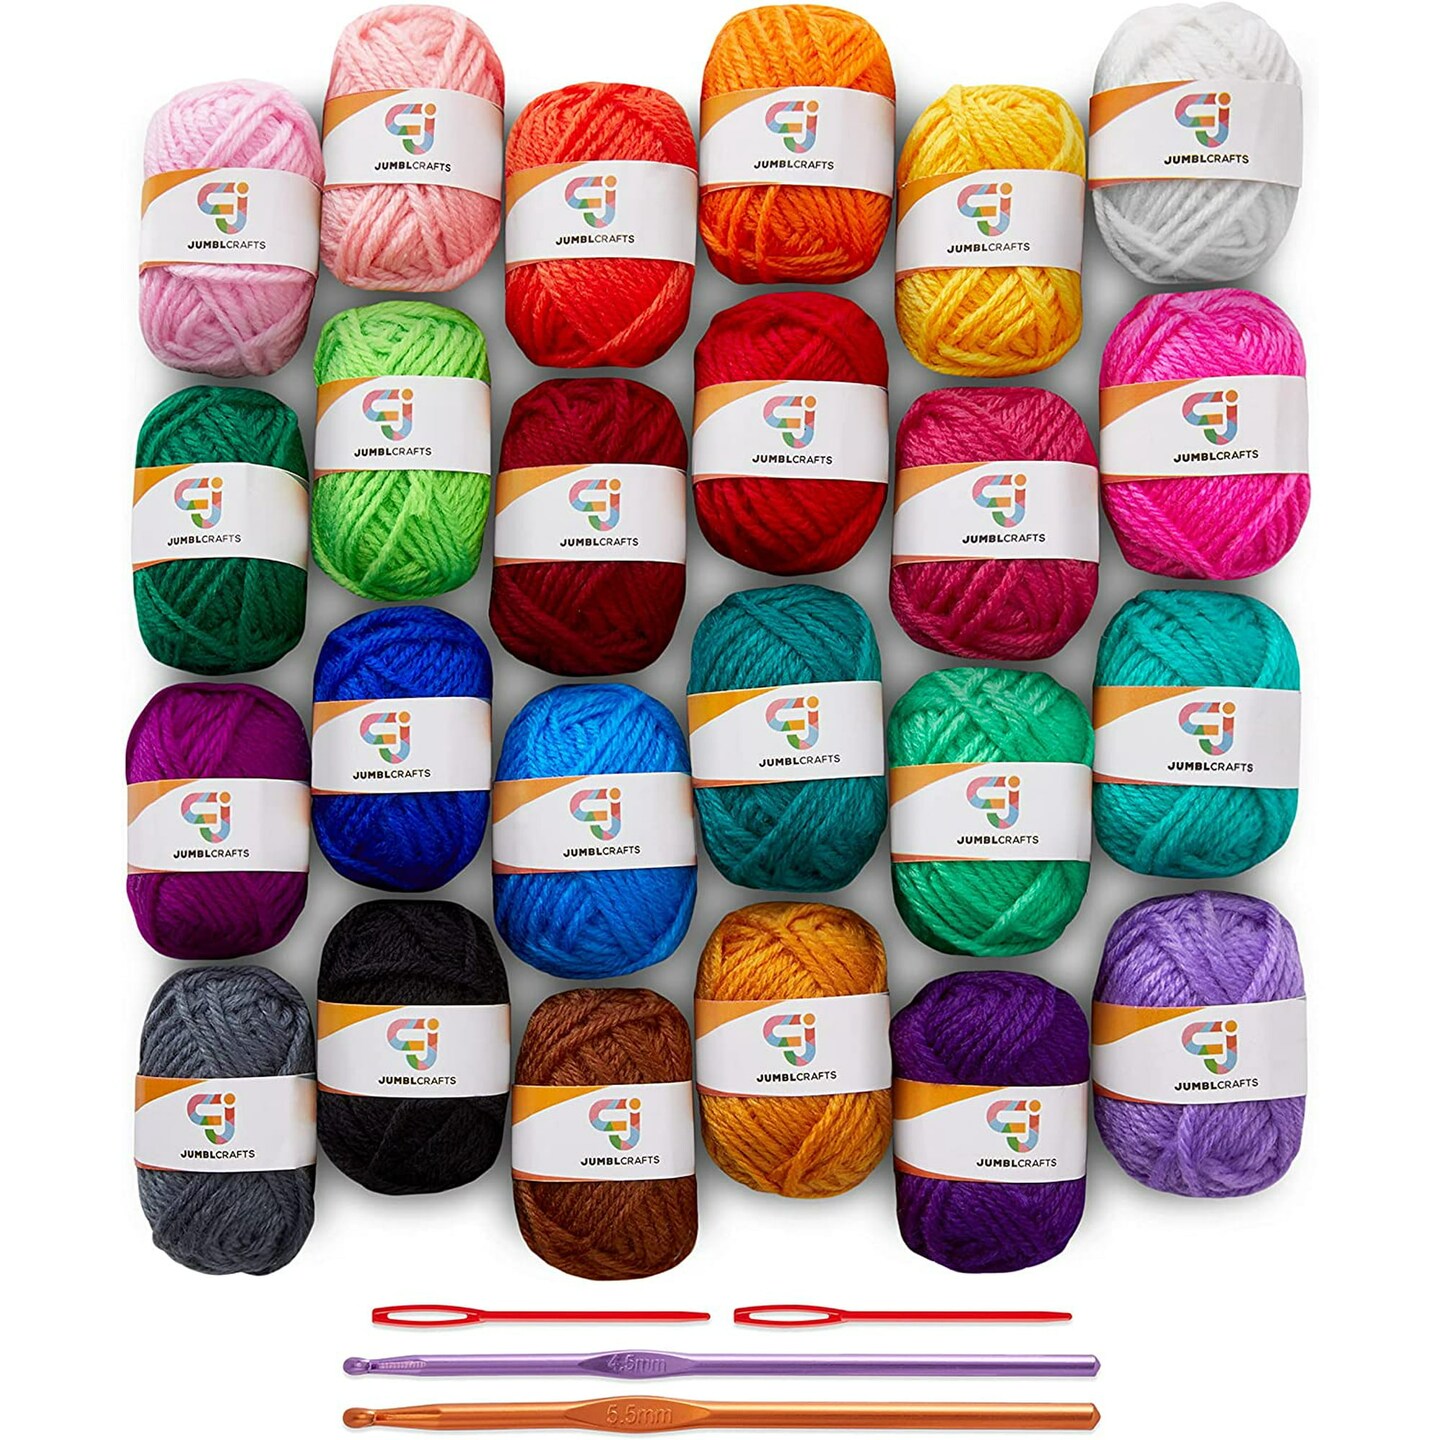 30 Acrylic Yarn Skeins Unique Colors - Bulk Yarn Kit - 1300 Yards